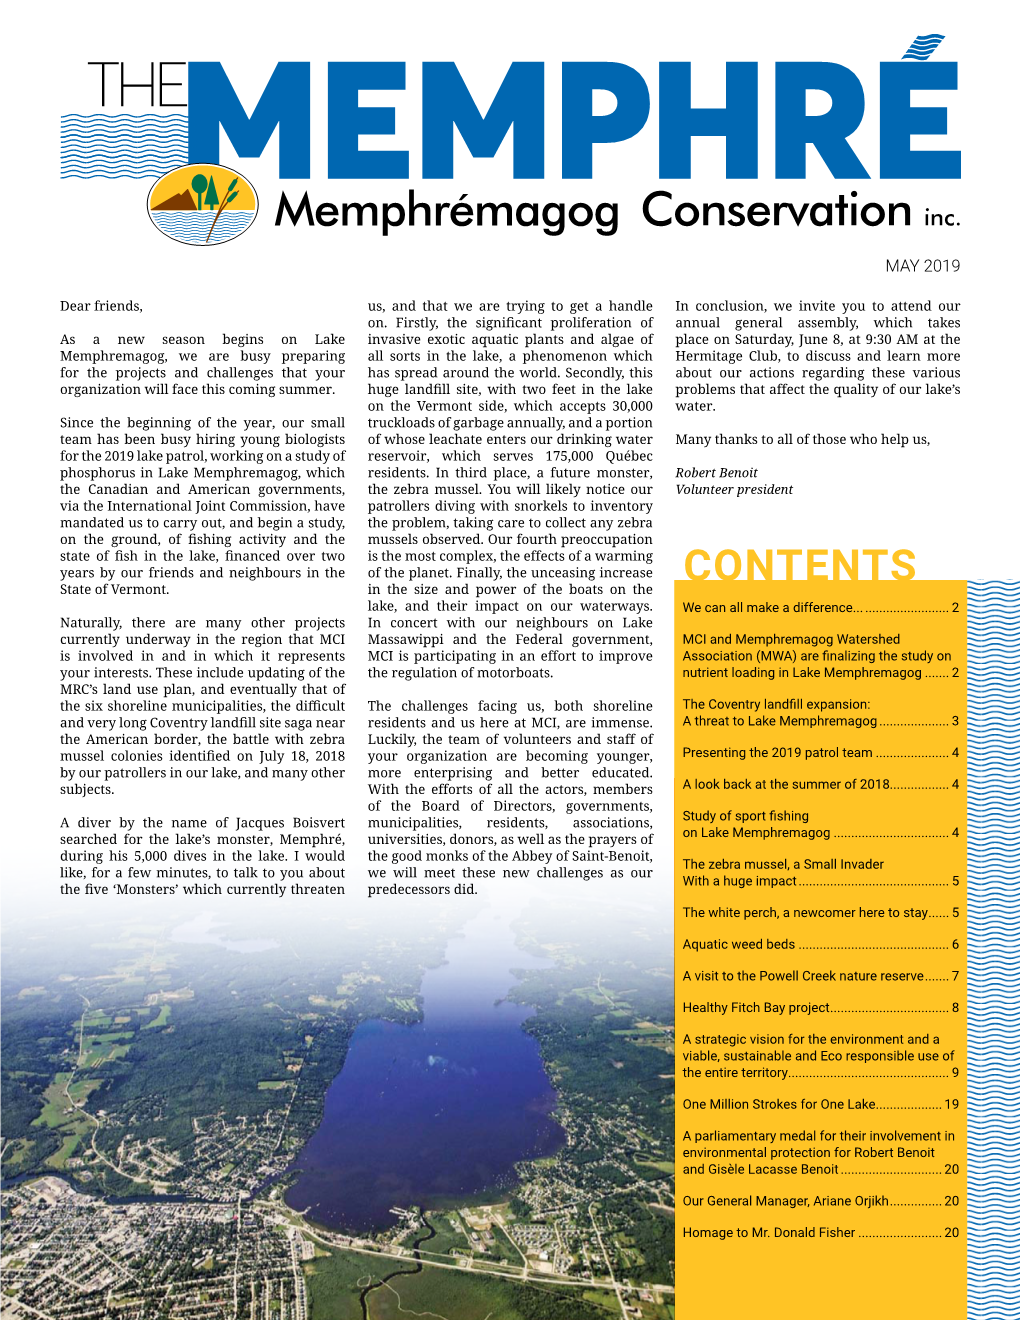 A Threat to Lake Memphremagog